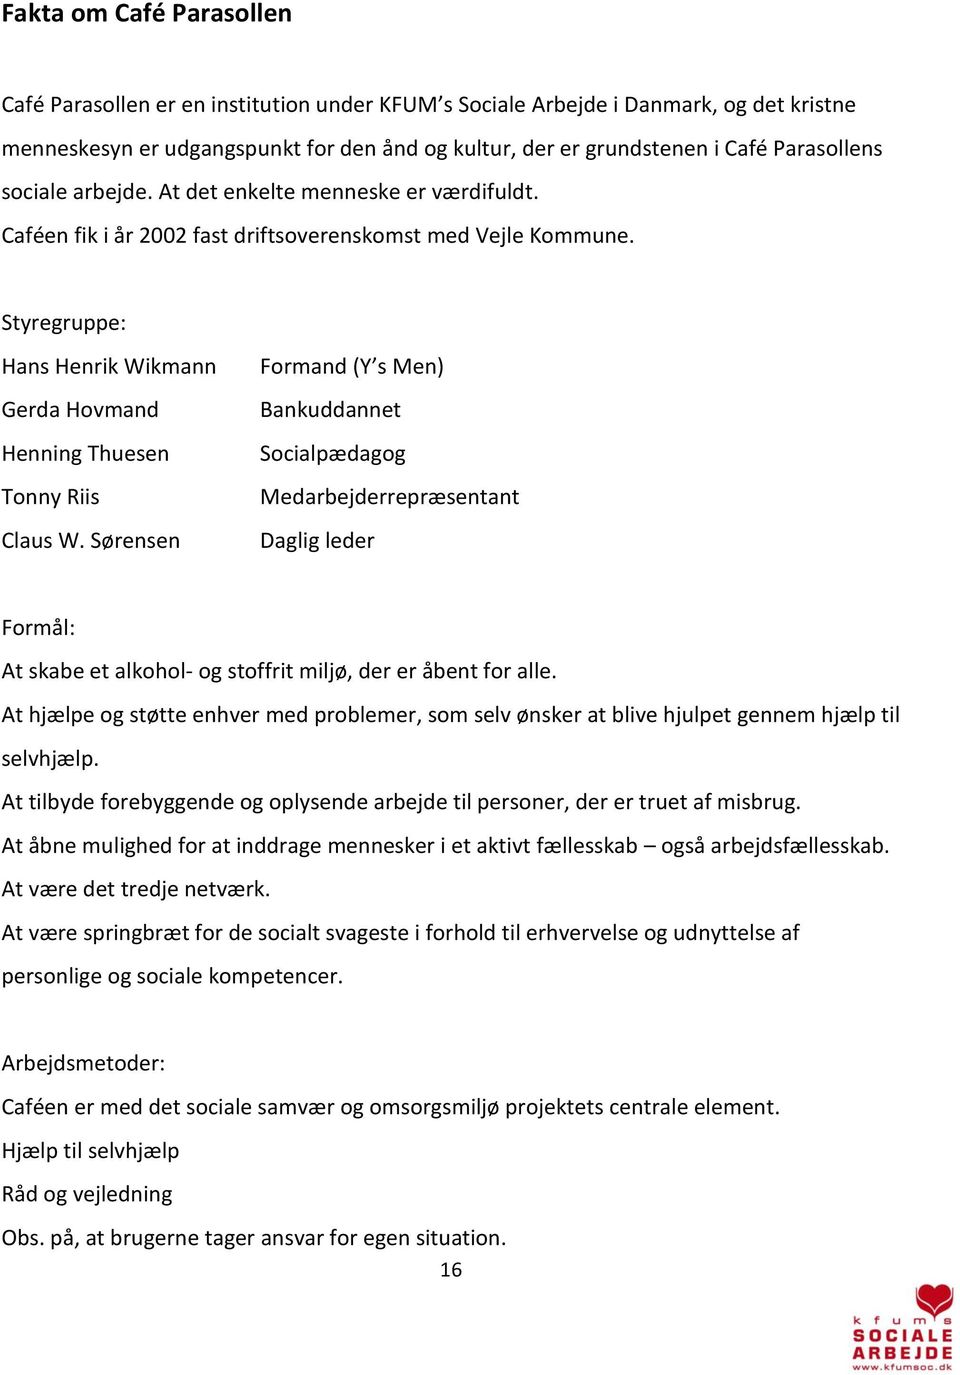 Årsrapport Café Parasollen, Vejle KFUM s Sociale Arbejde - PDF Gratis  download